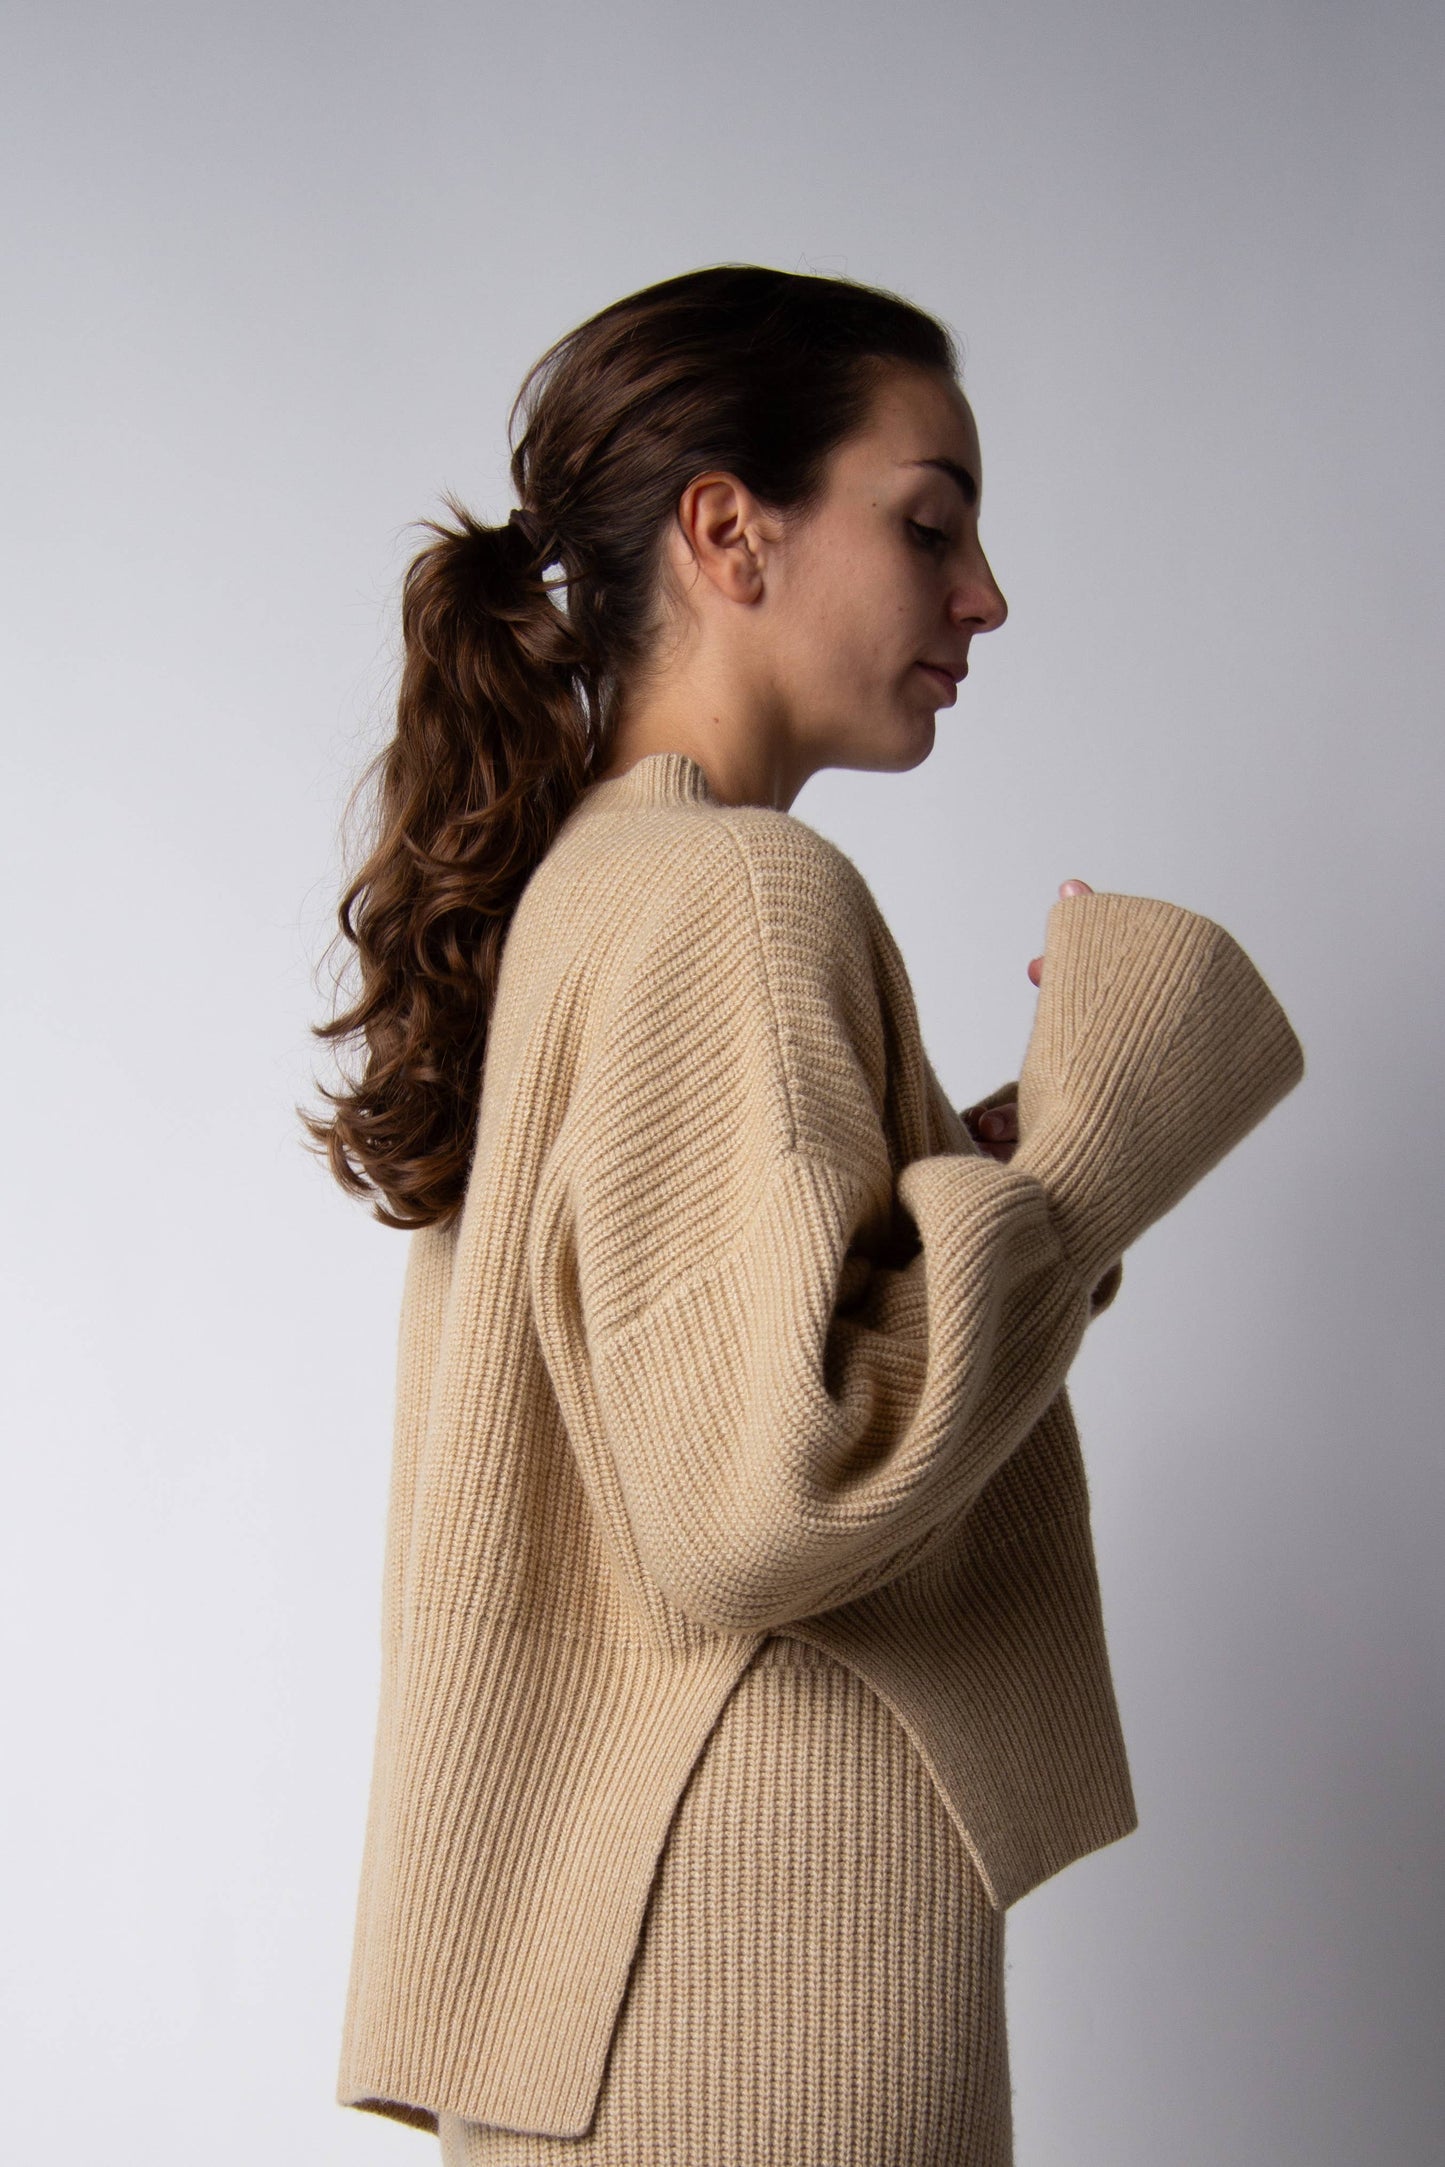 LÈMME - Cashmere Mix Flared Sleeve Sweater: L / Beige